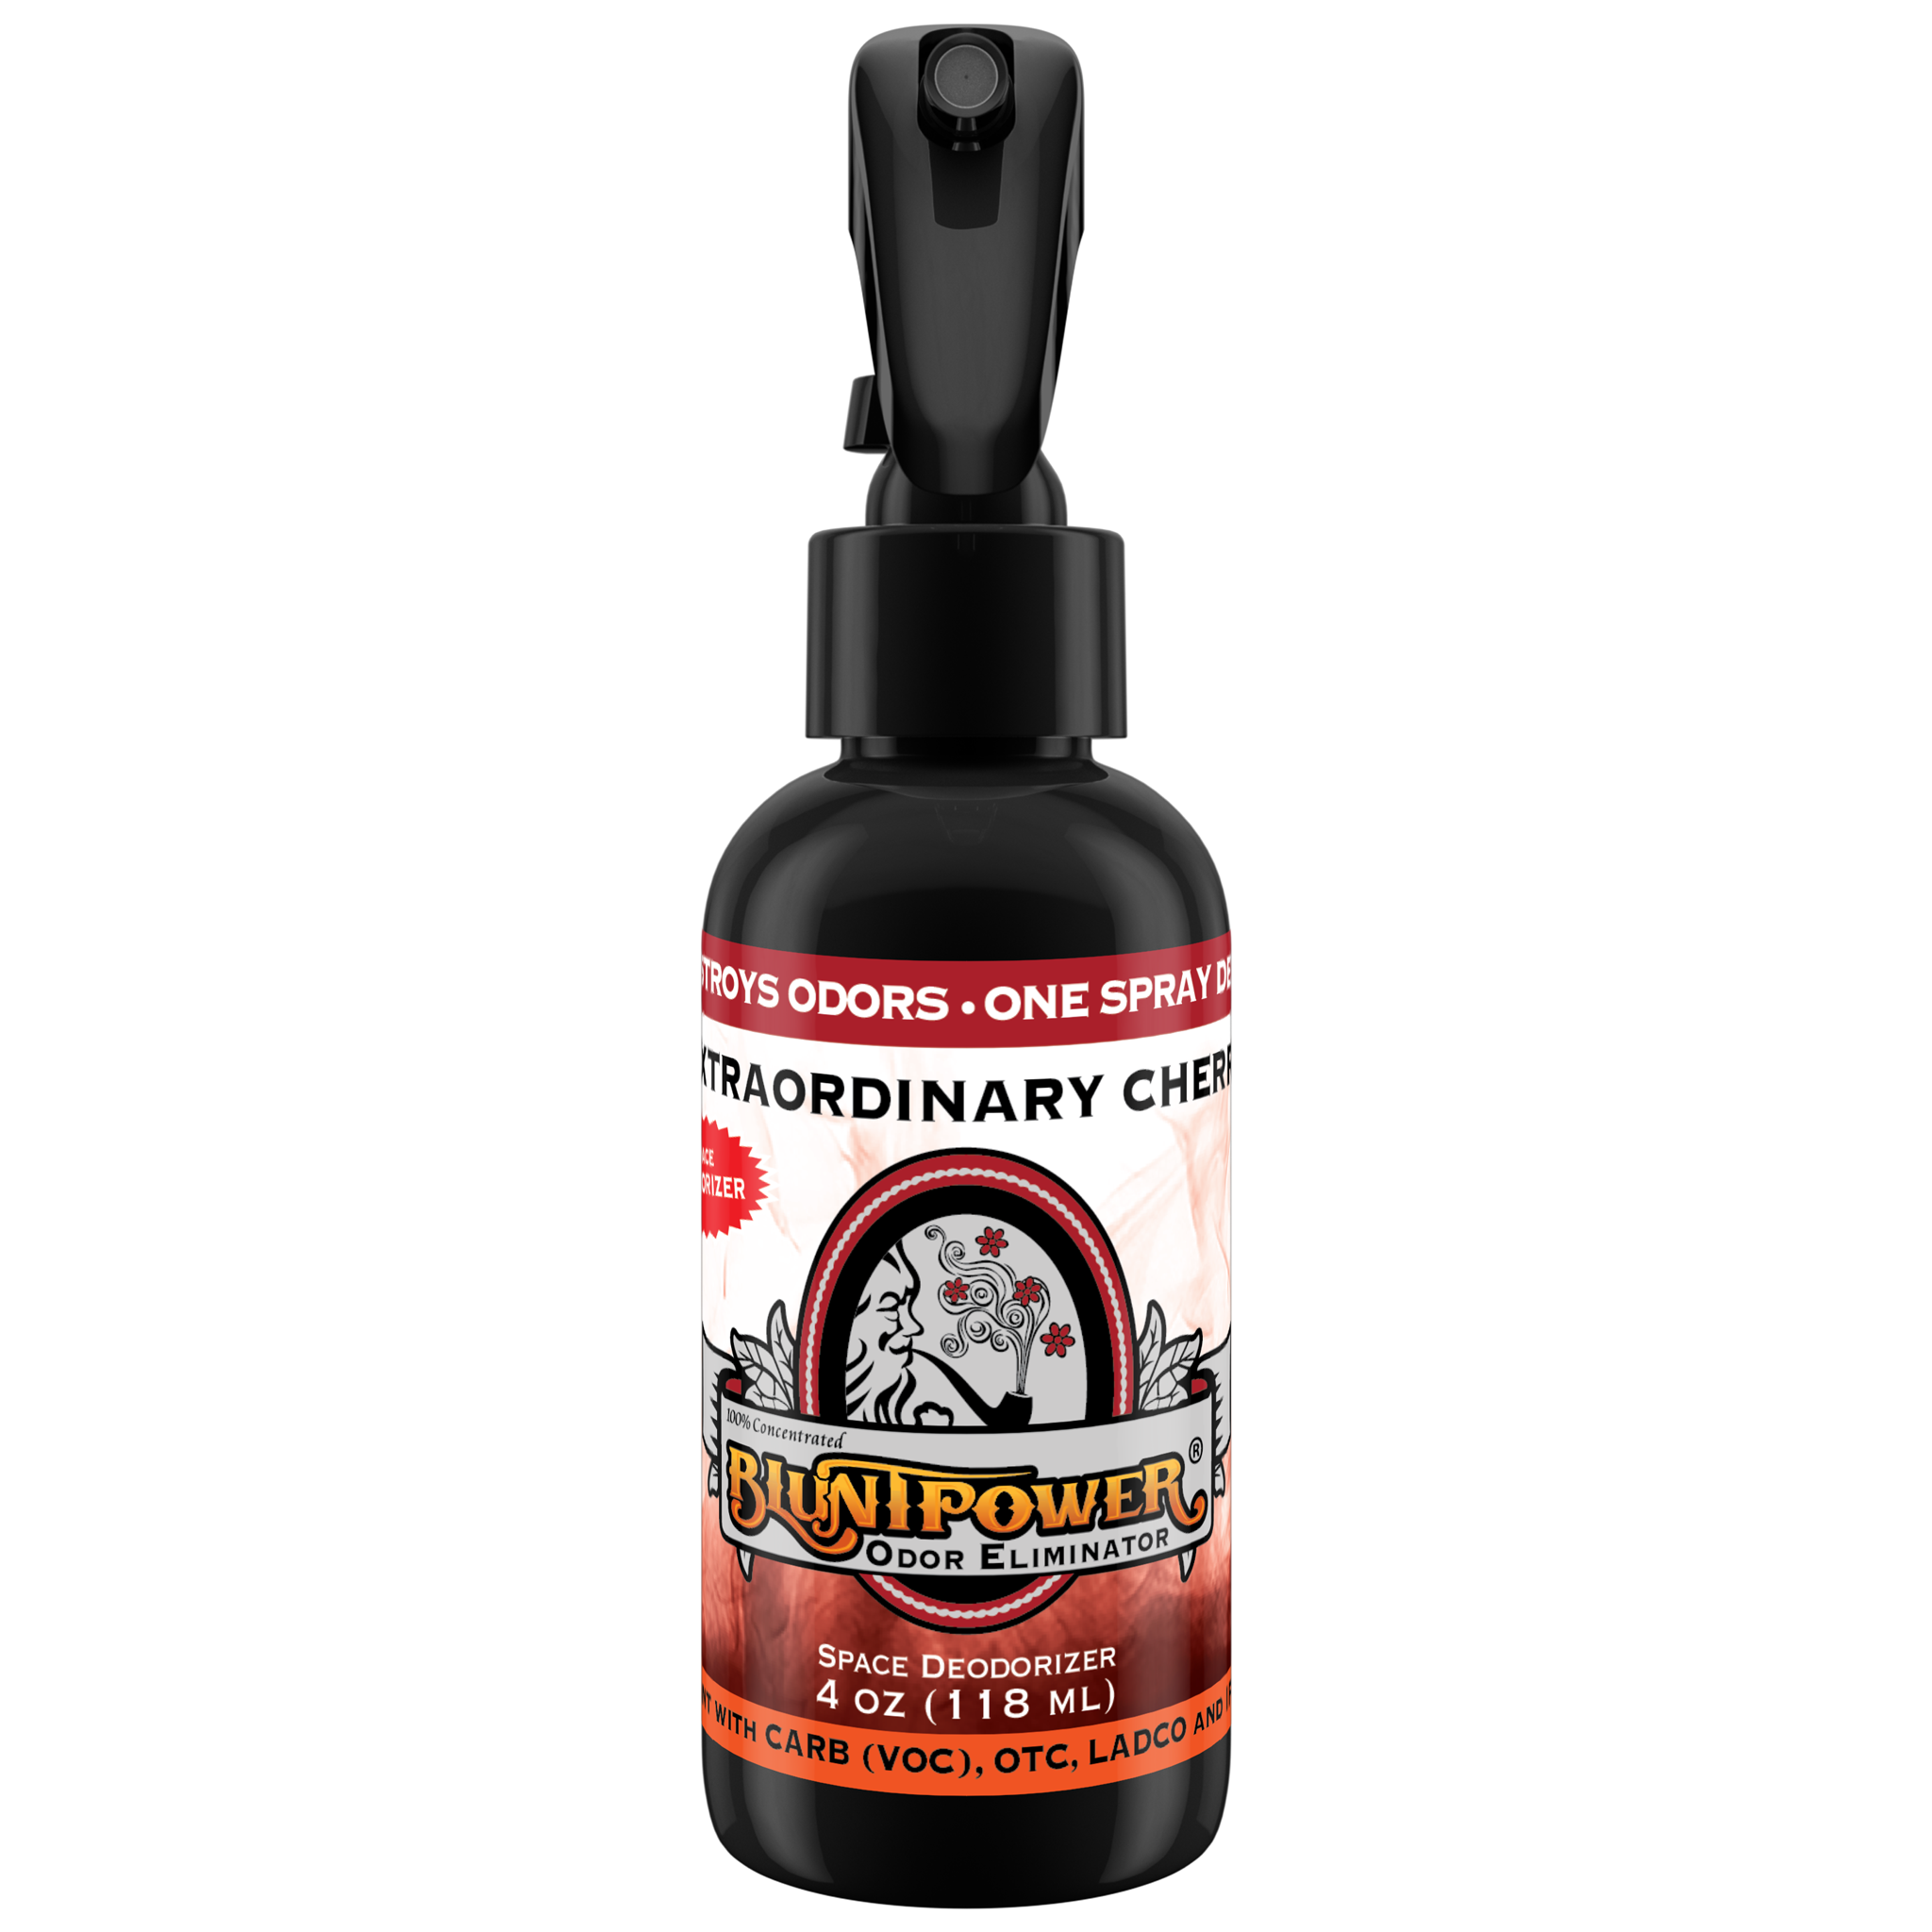 BluntPower Odor Eliminator - Extraordinary Cherry Scent Size: 4 fl oz